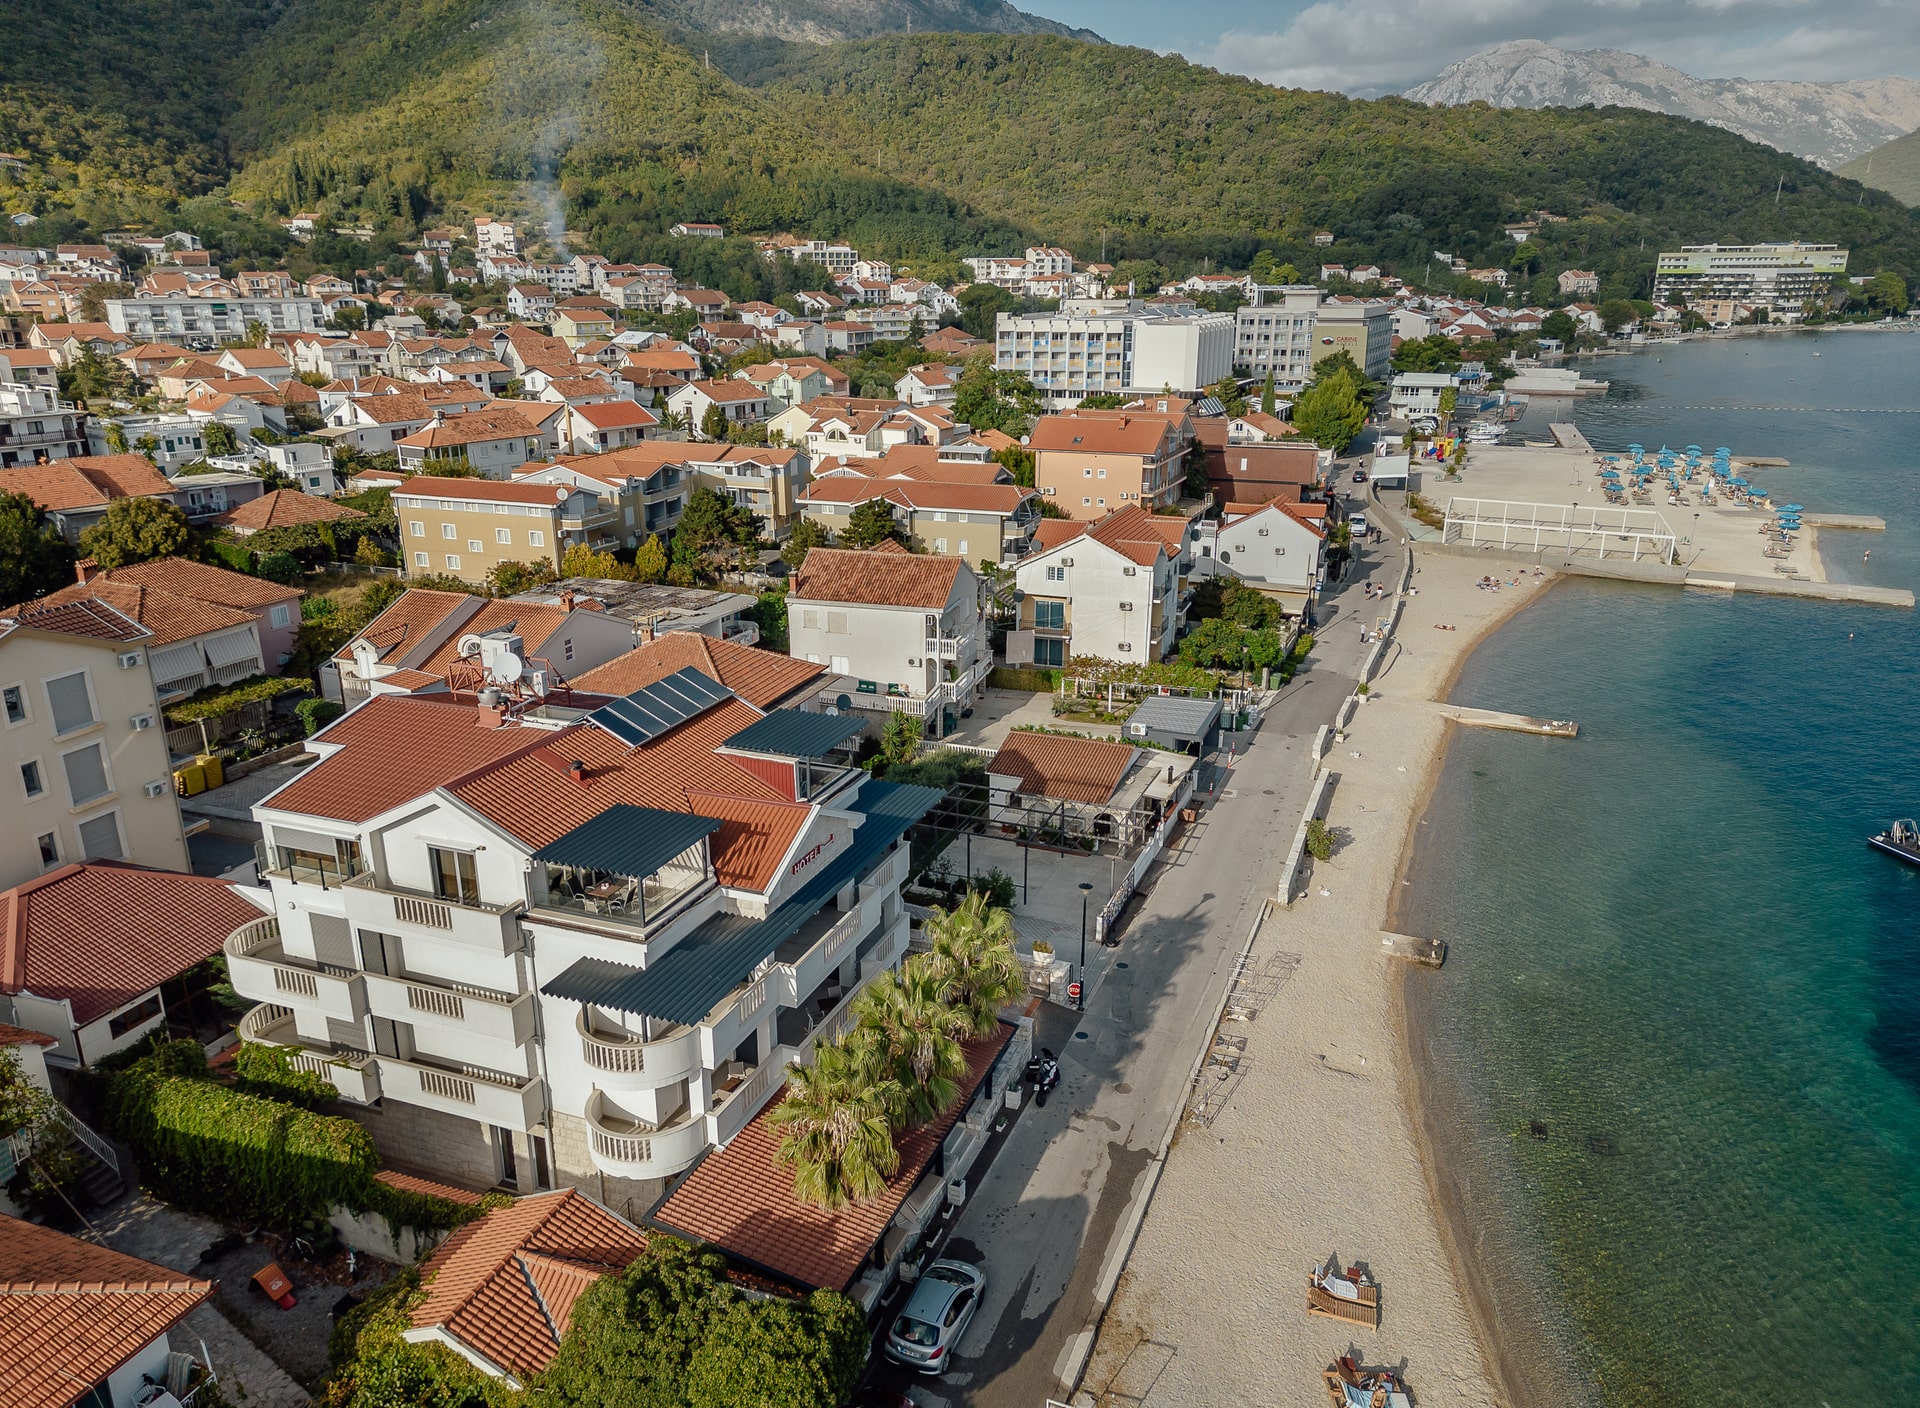 Herceg Novi, Bijela – fully renovated 4-star hotel set on the waterfront